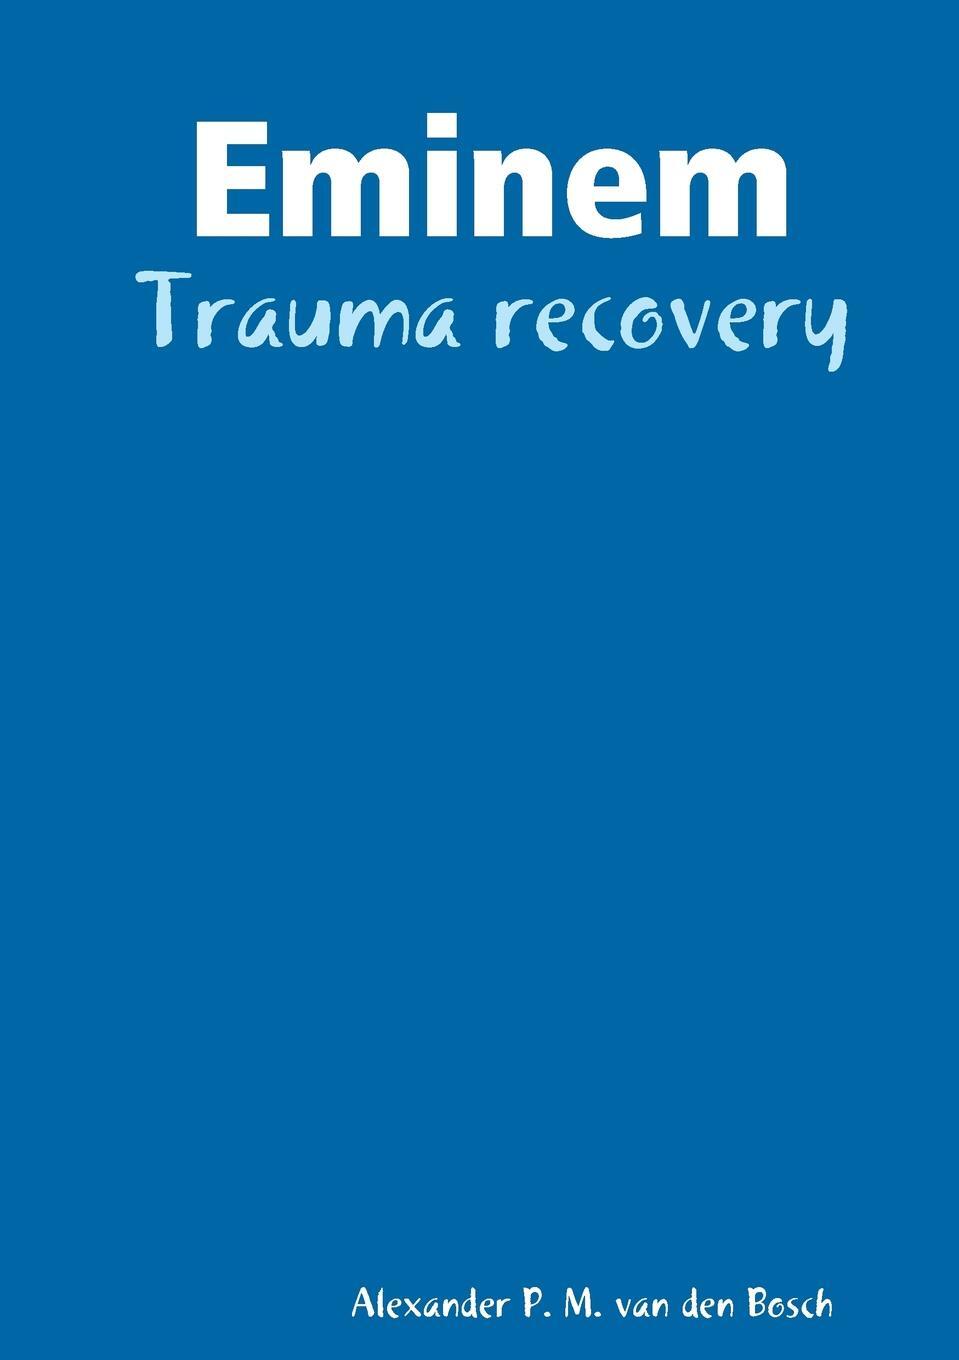 фото Eminem - Trauma recovery